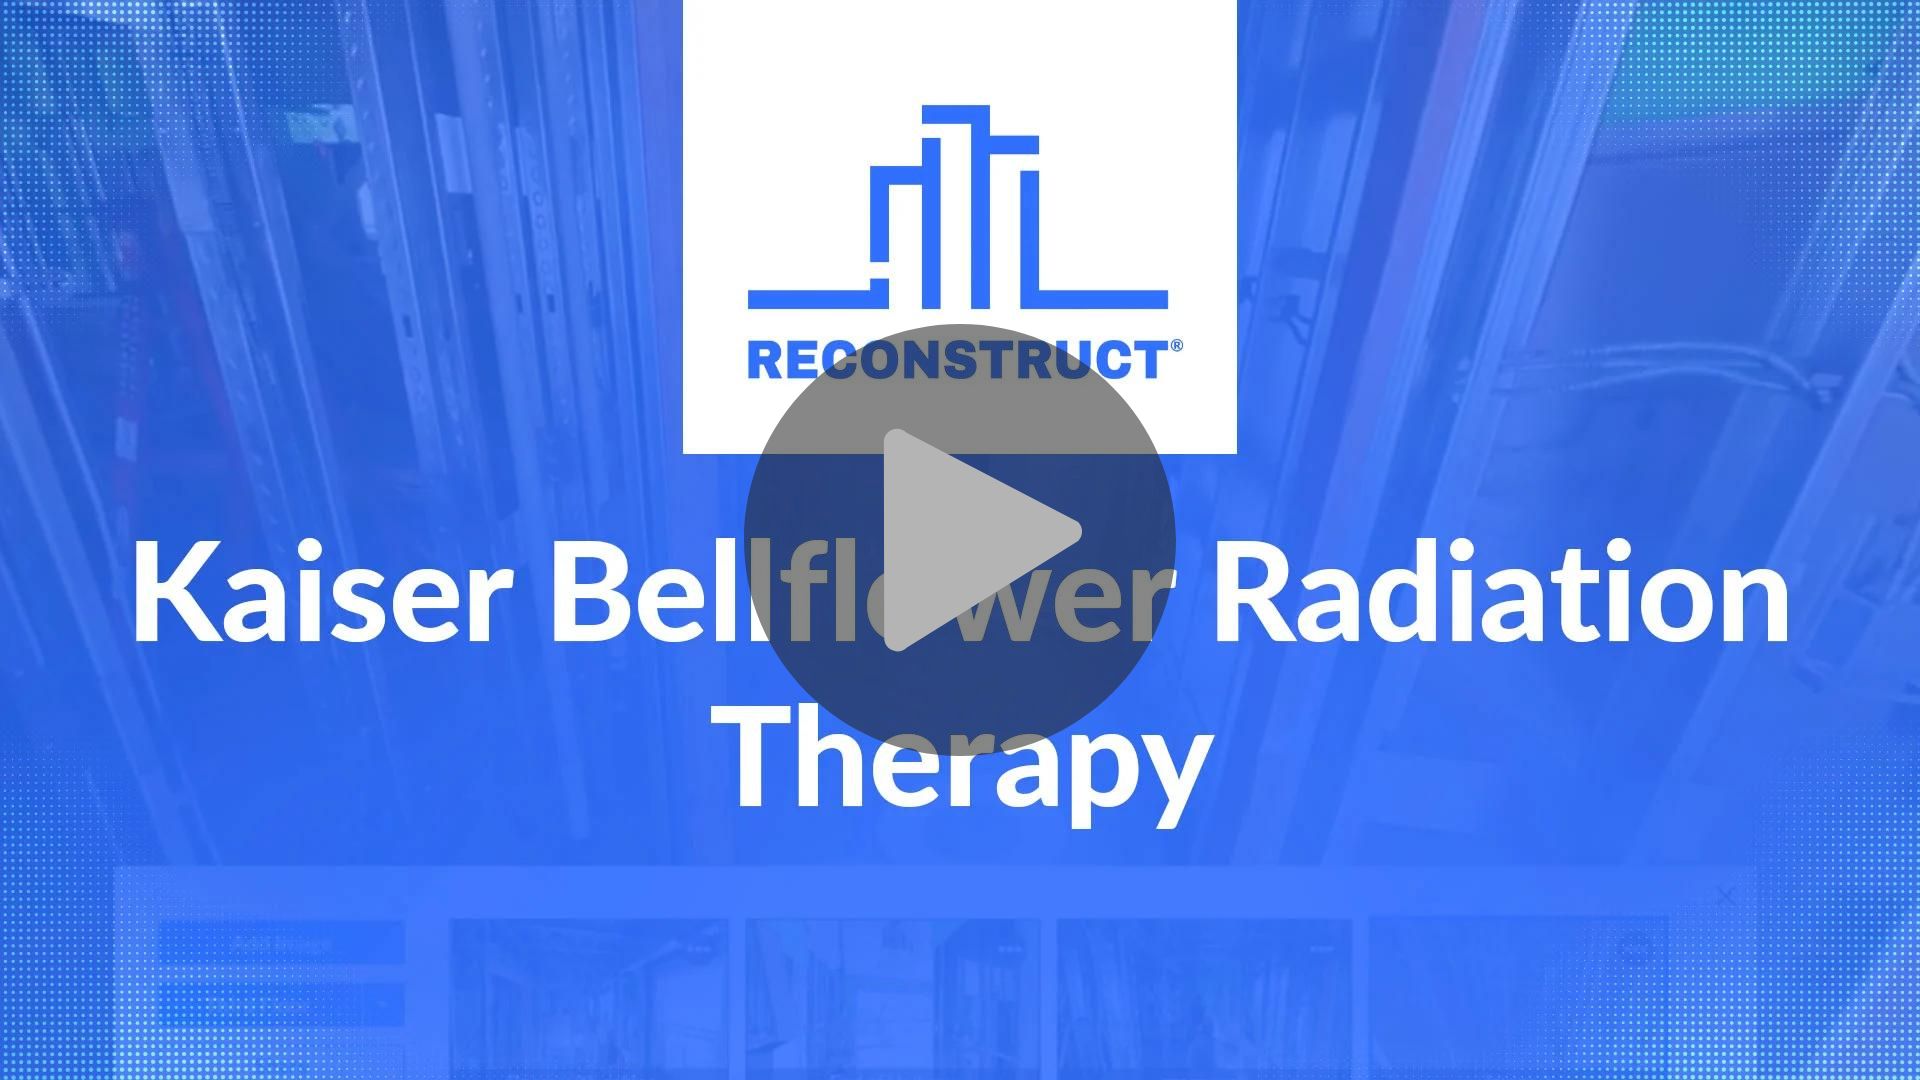 RI-Kaiser-Bellflower-Radiation-Therapy-Video-Thumbnail-Playbutton